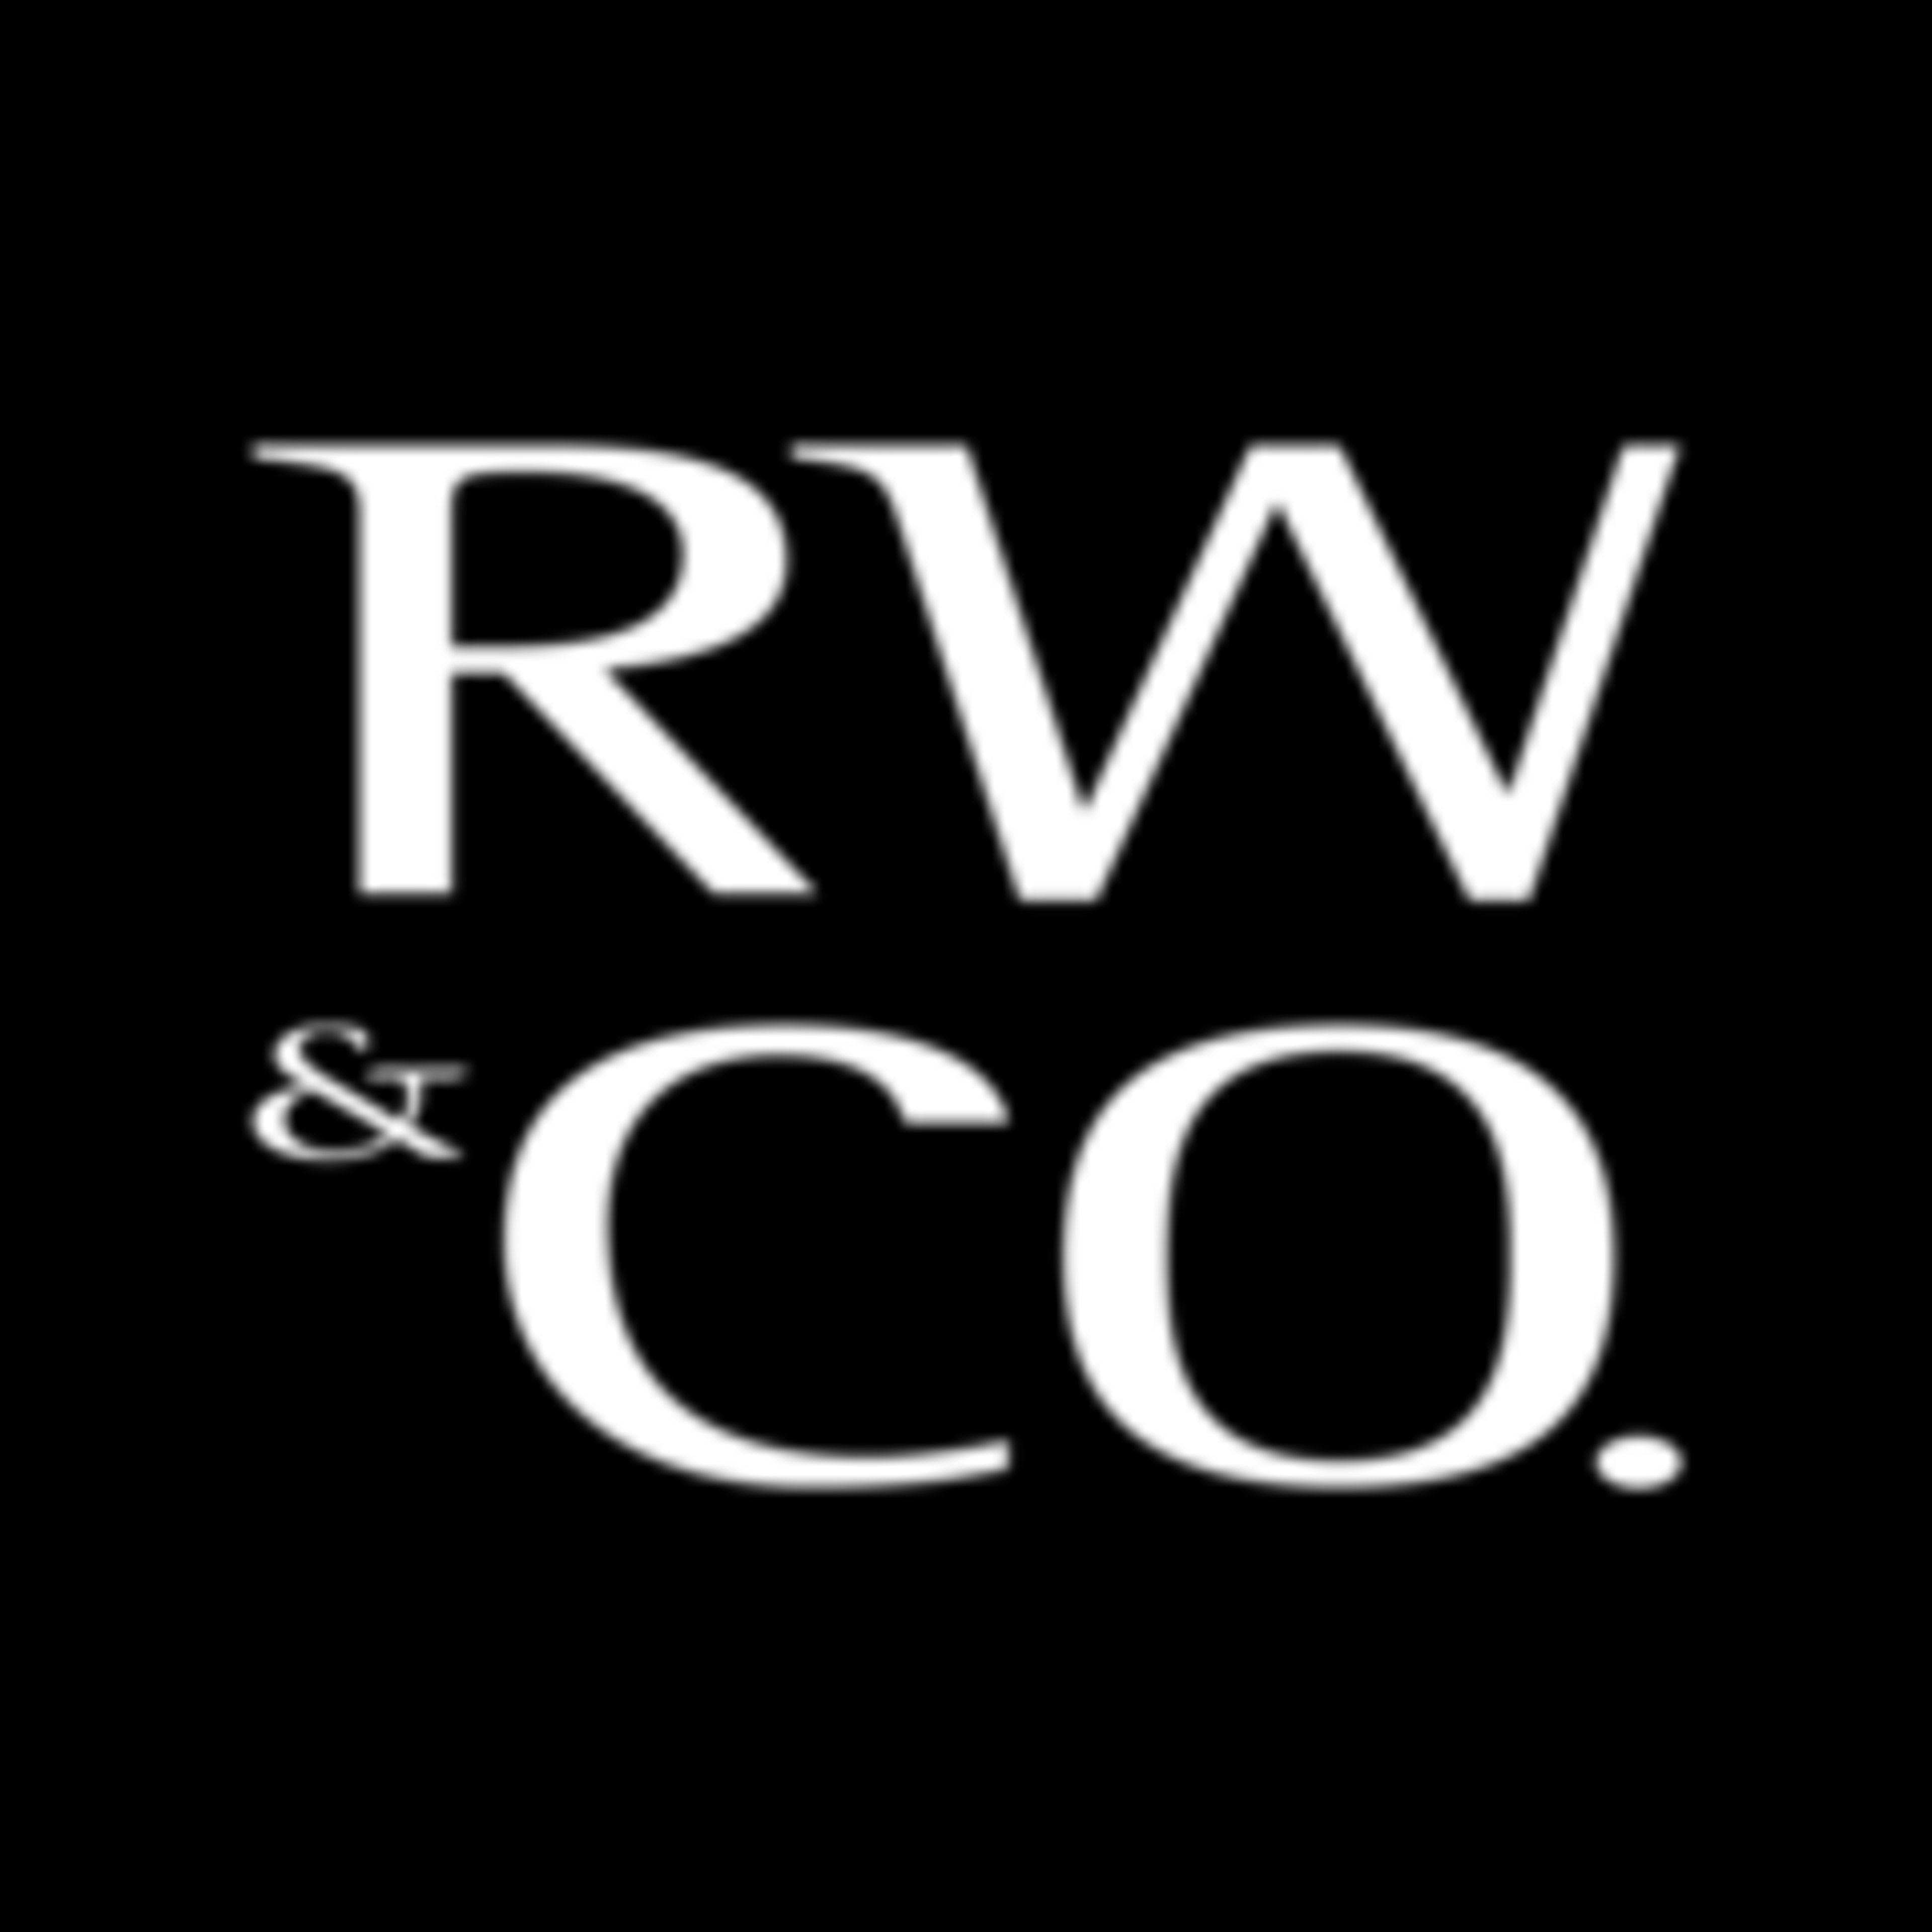 RW&COCode